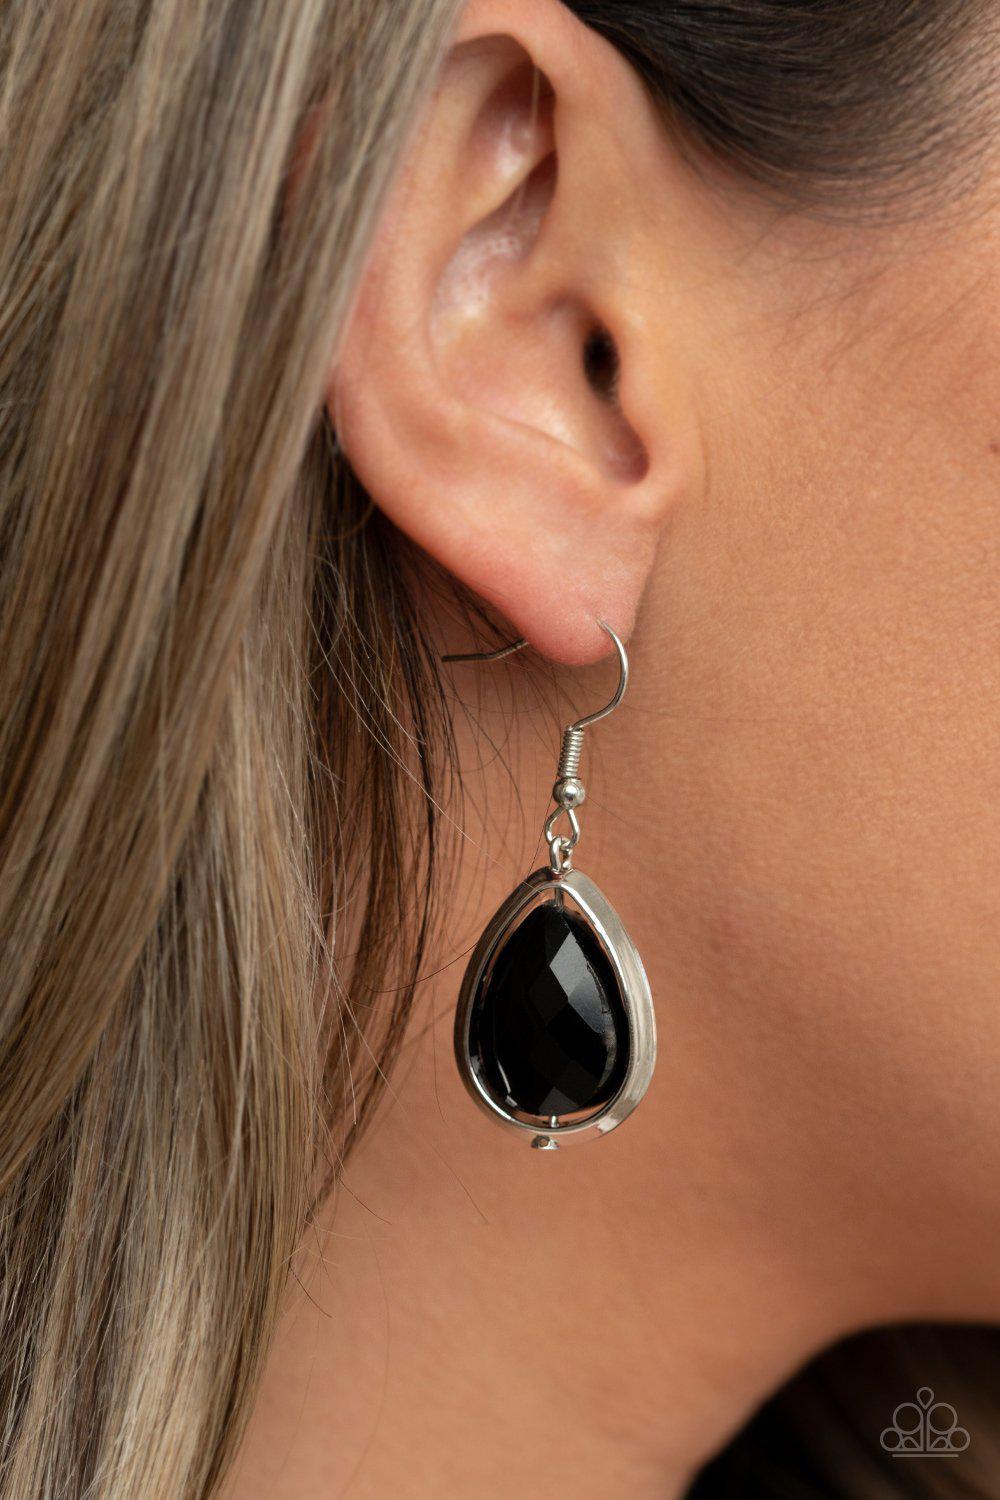 Drop-Dead Duchess Black Earrings - Paparazzi Accessories - model -CarasShop.com - $5 Jewelry by Cara Jewels